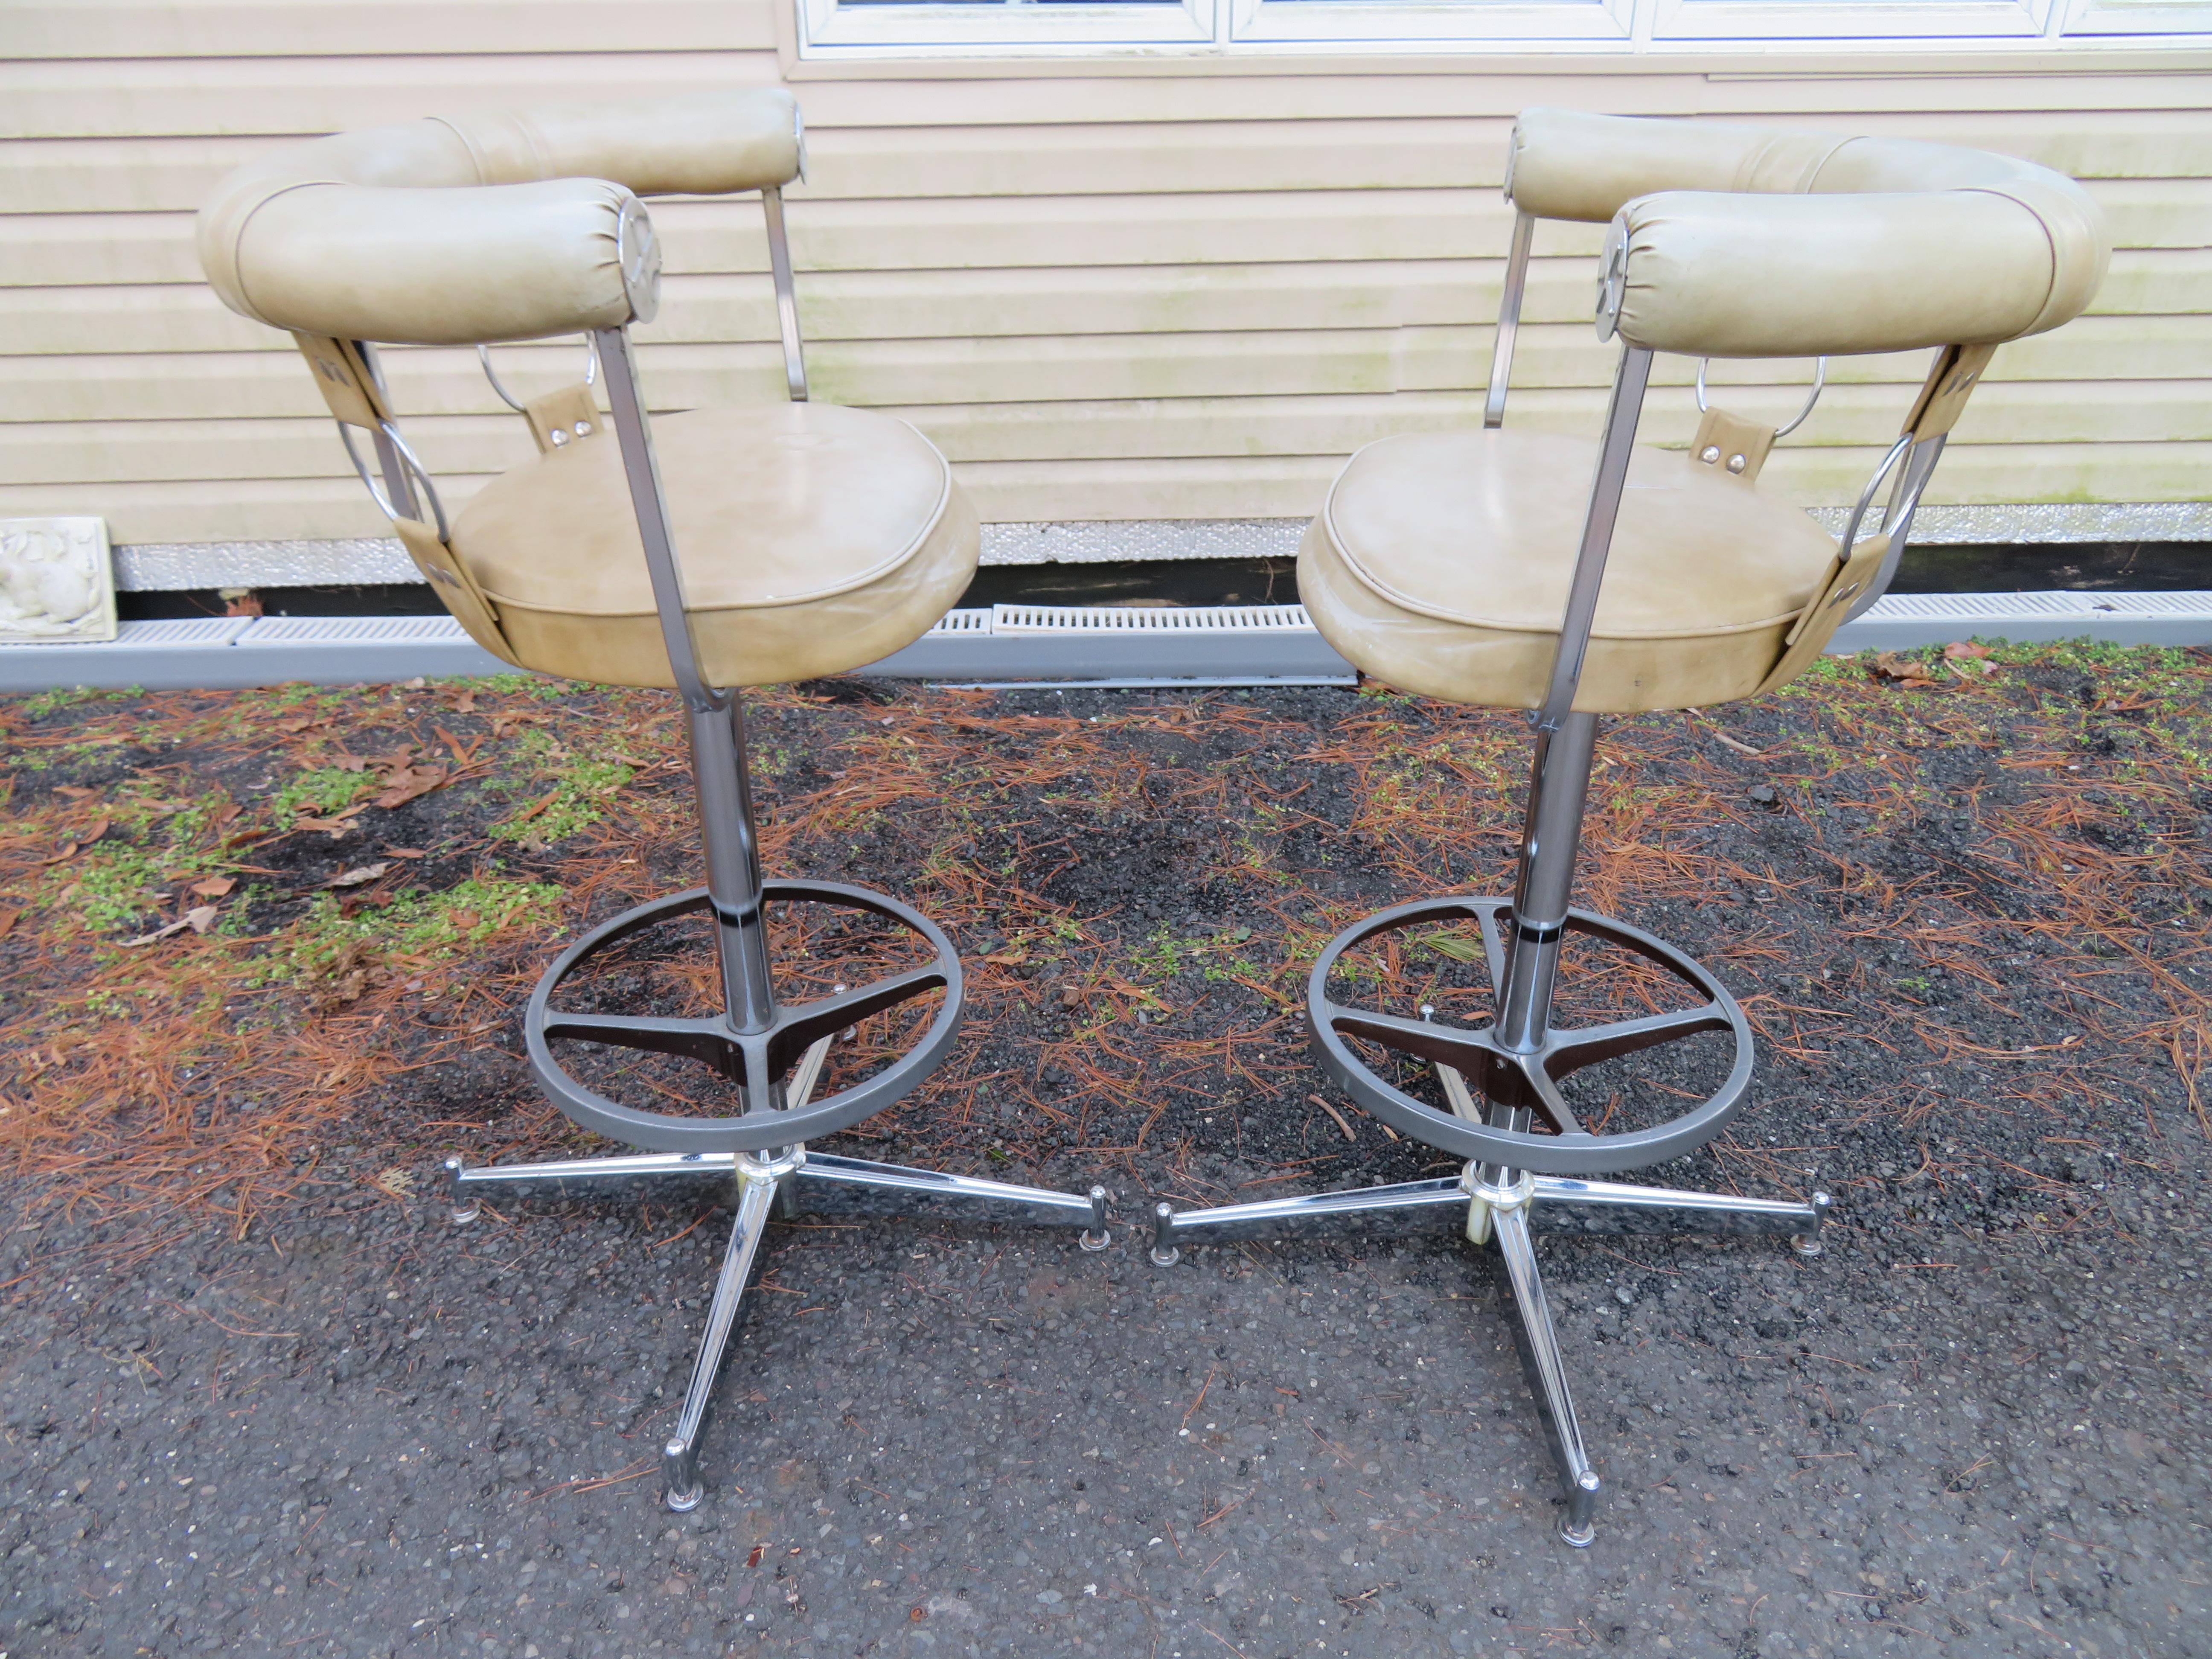 70s style bar stools